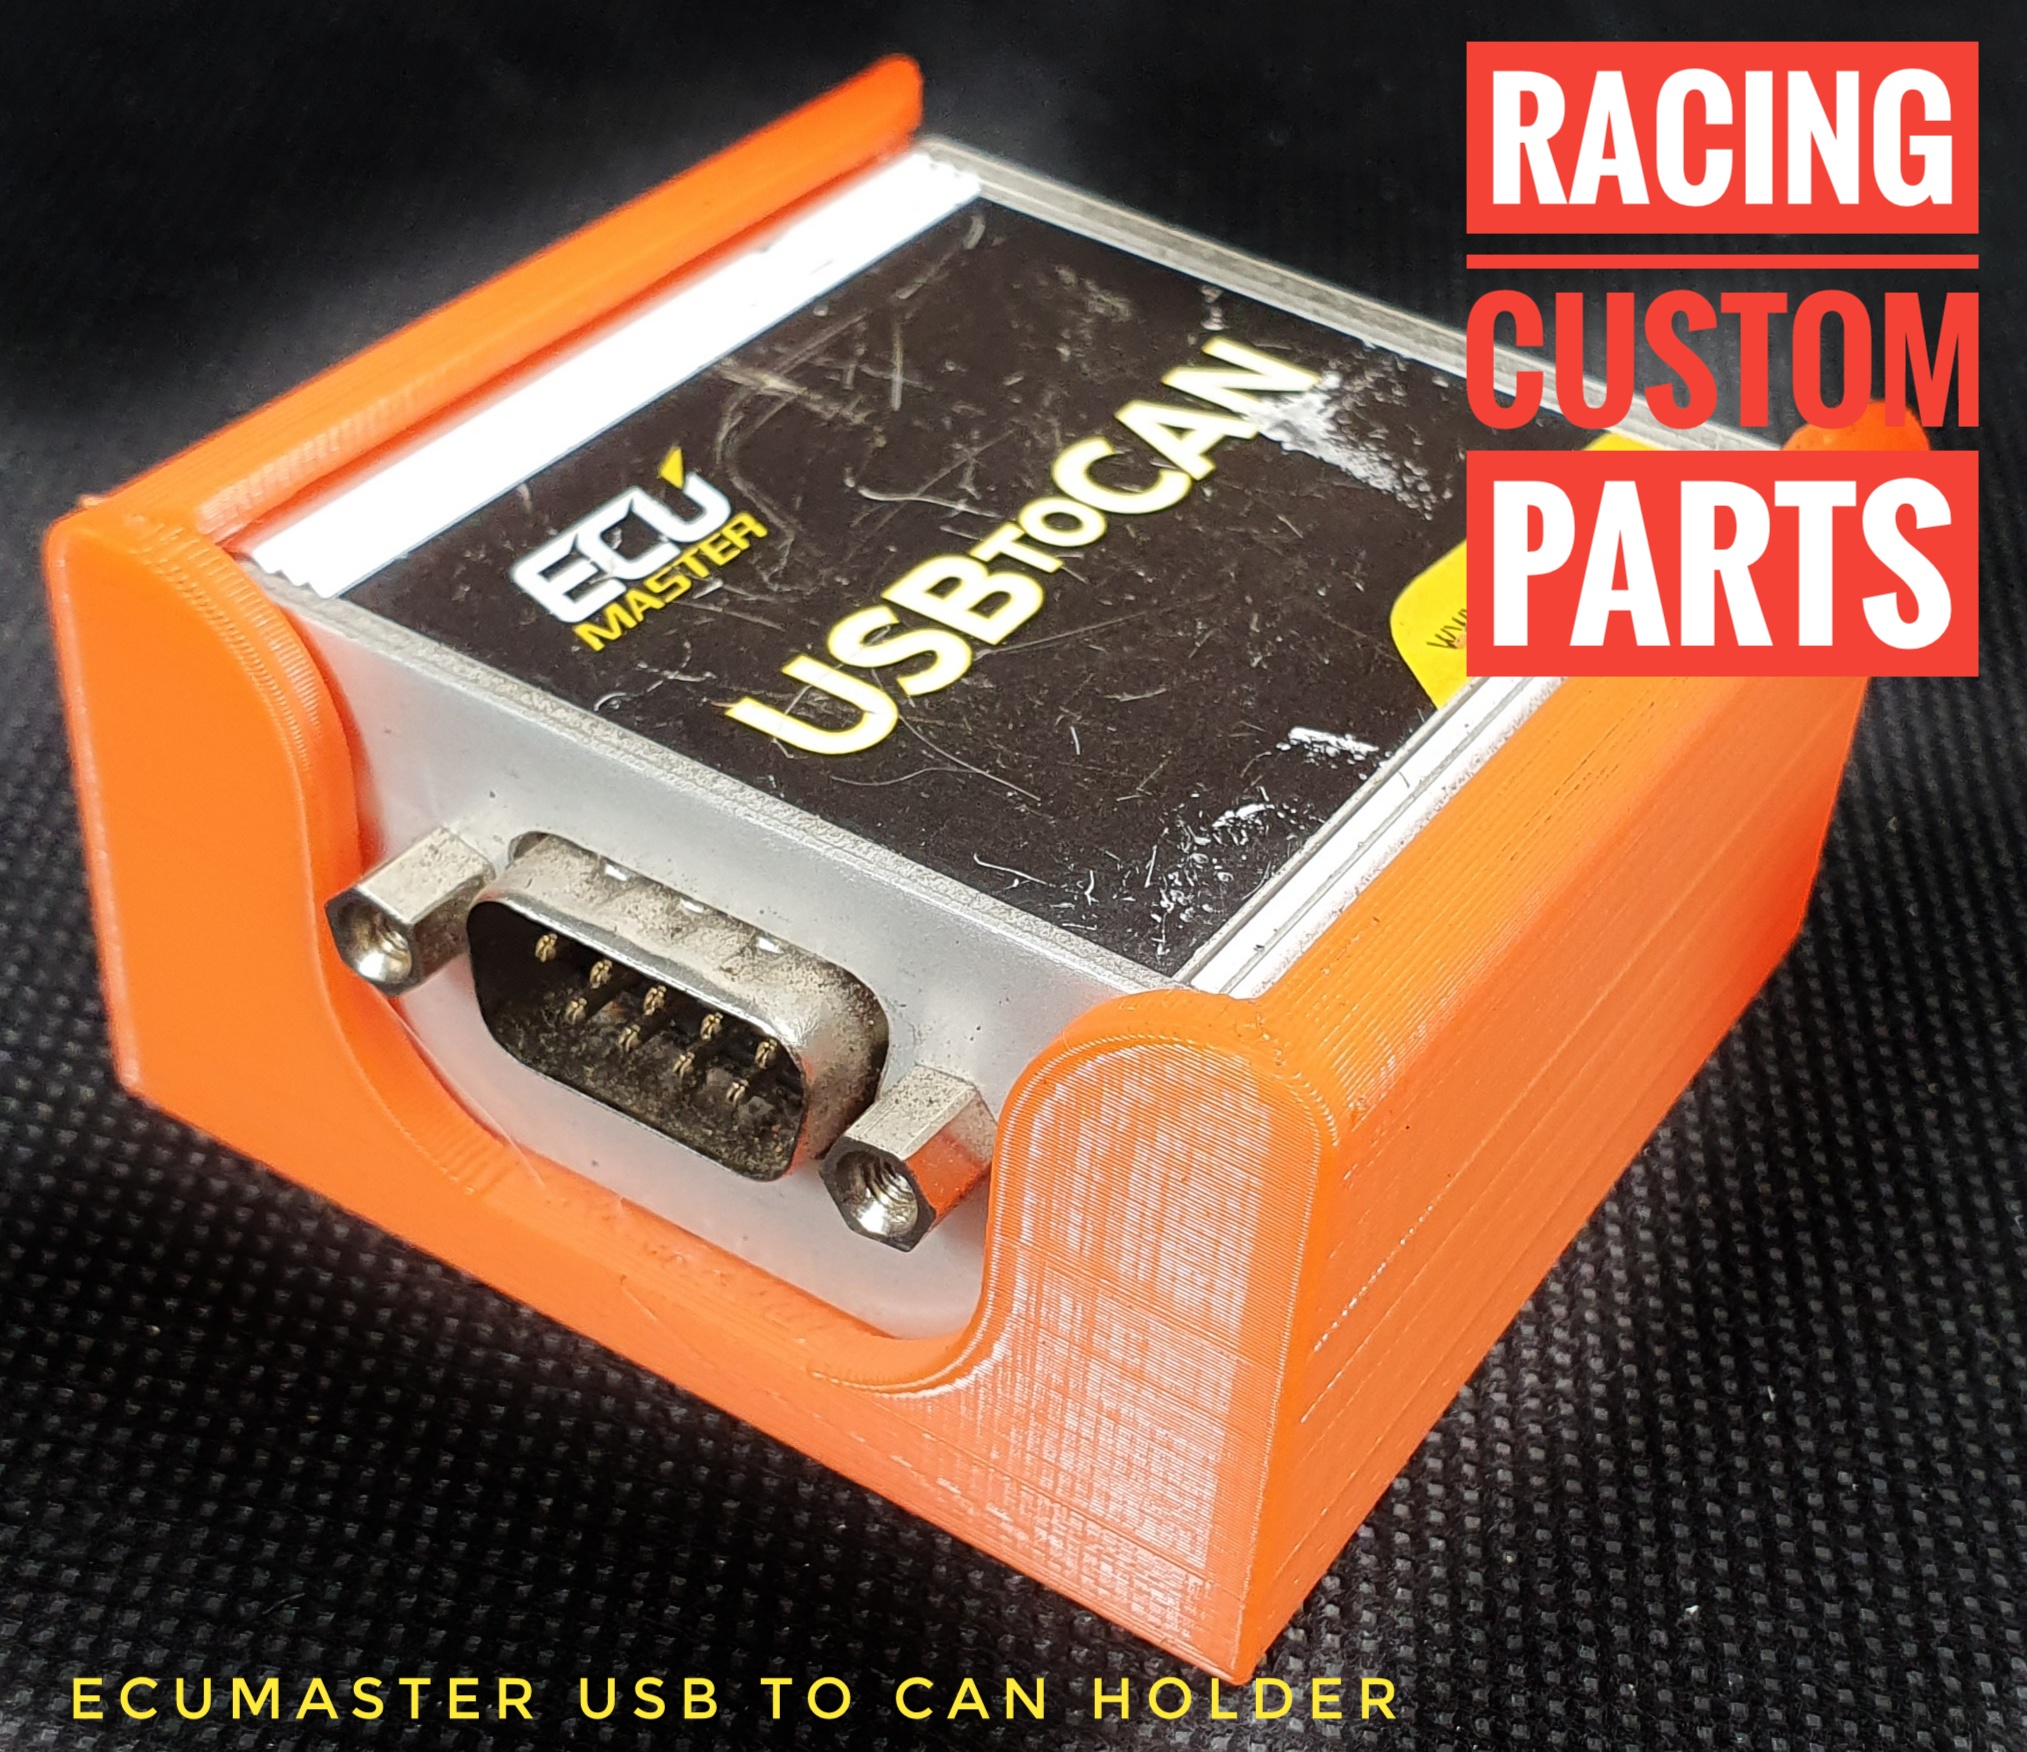 Ecumaster usb to can holder racing custom parts 3d printed parts